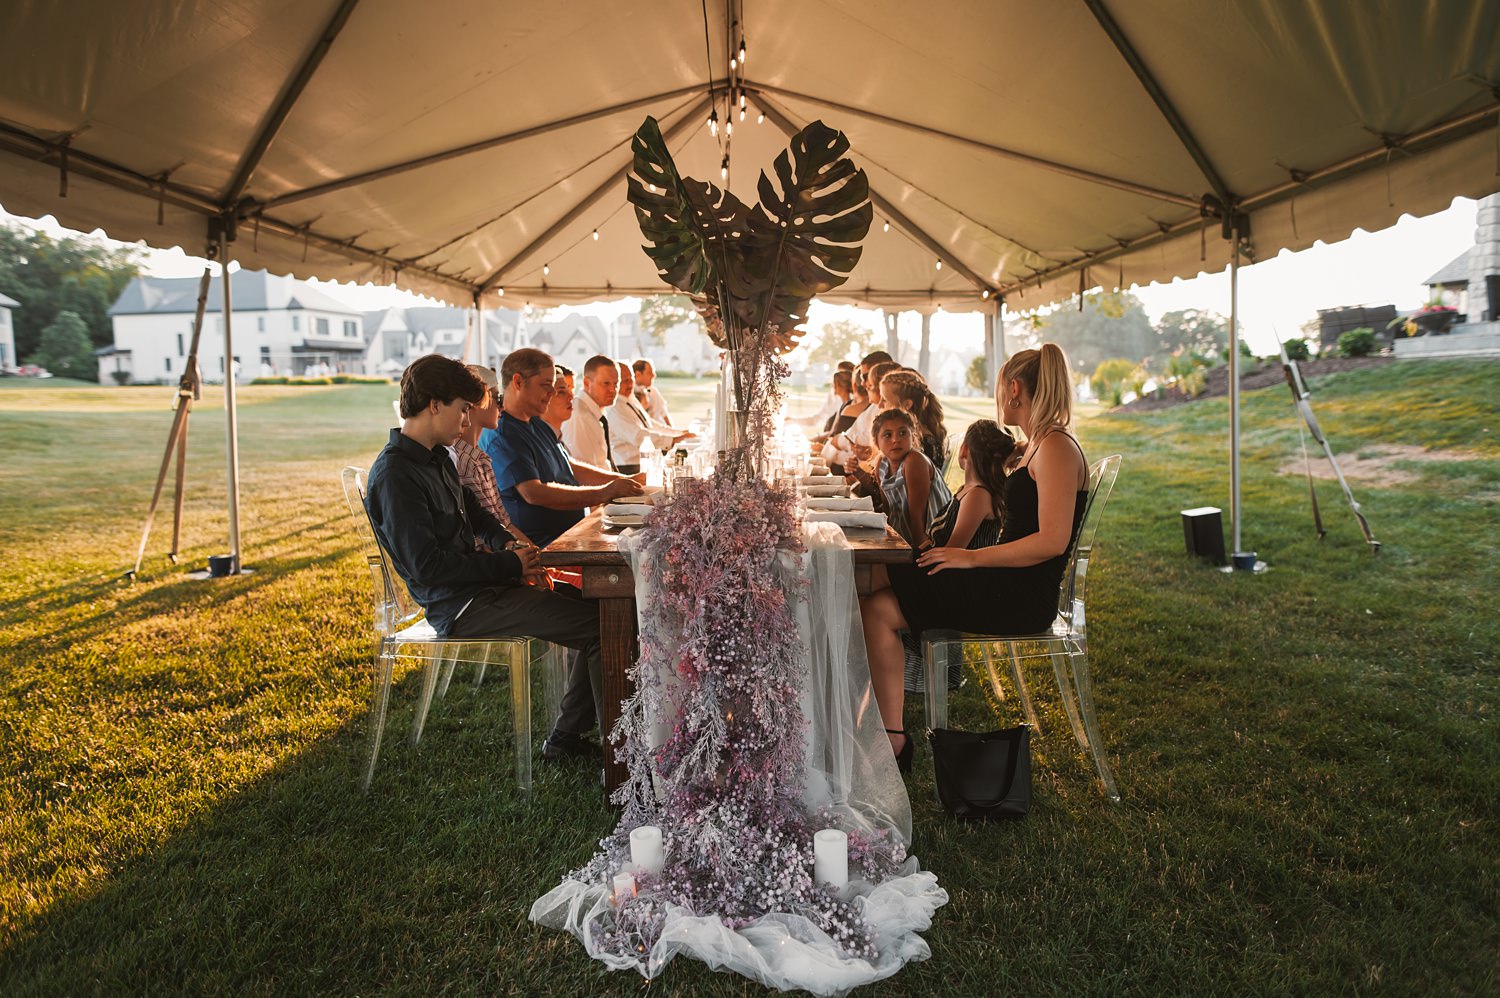 Lake Geneva Micro Wedding - The Adamkovi table set up tent reception garden, purple reception